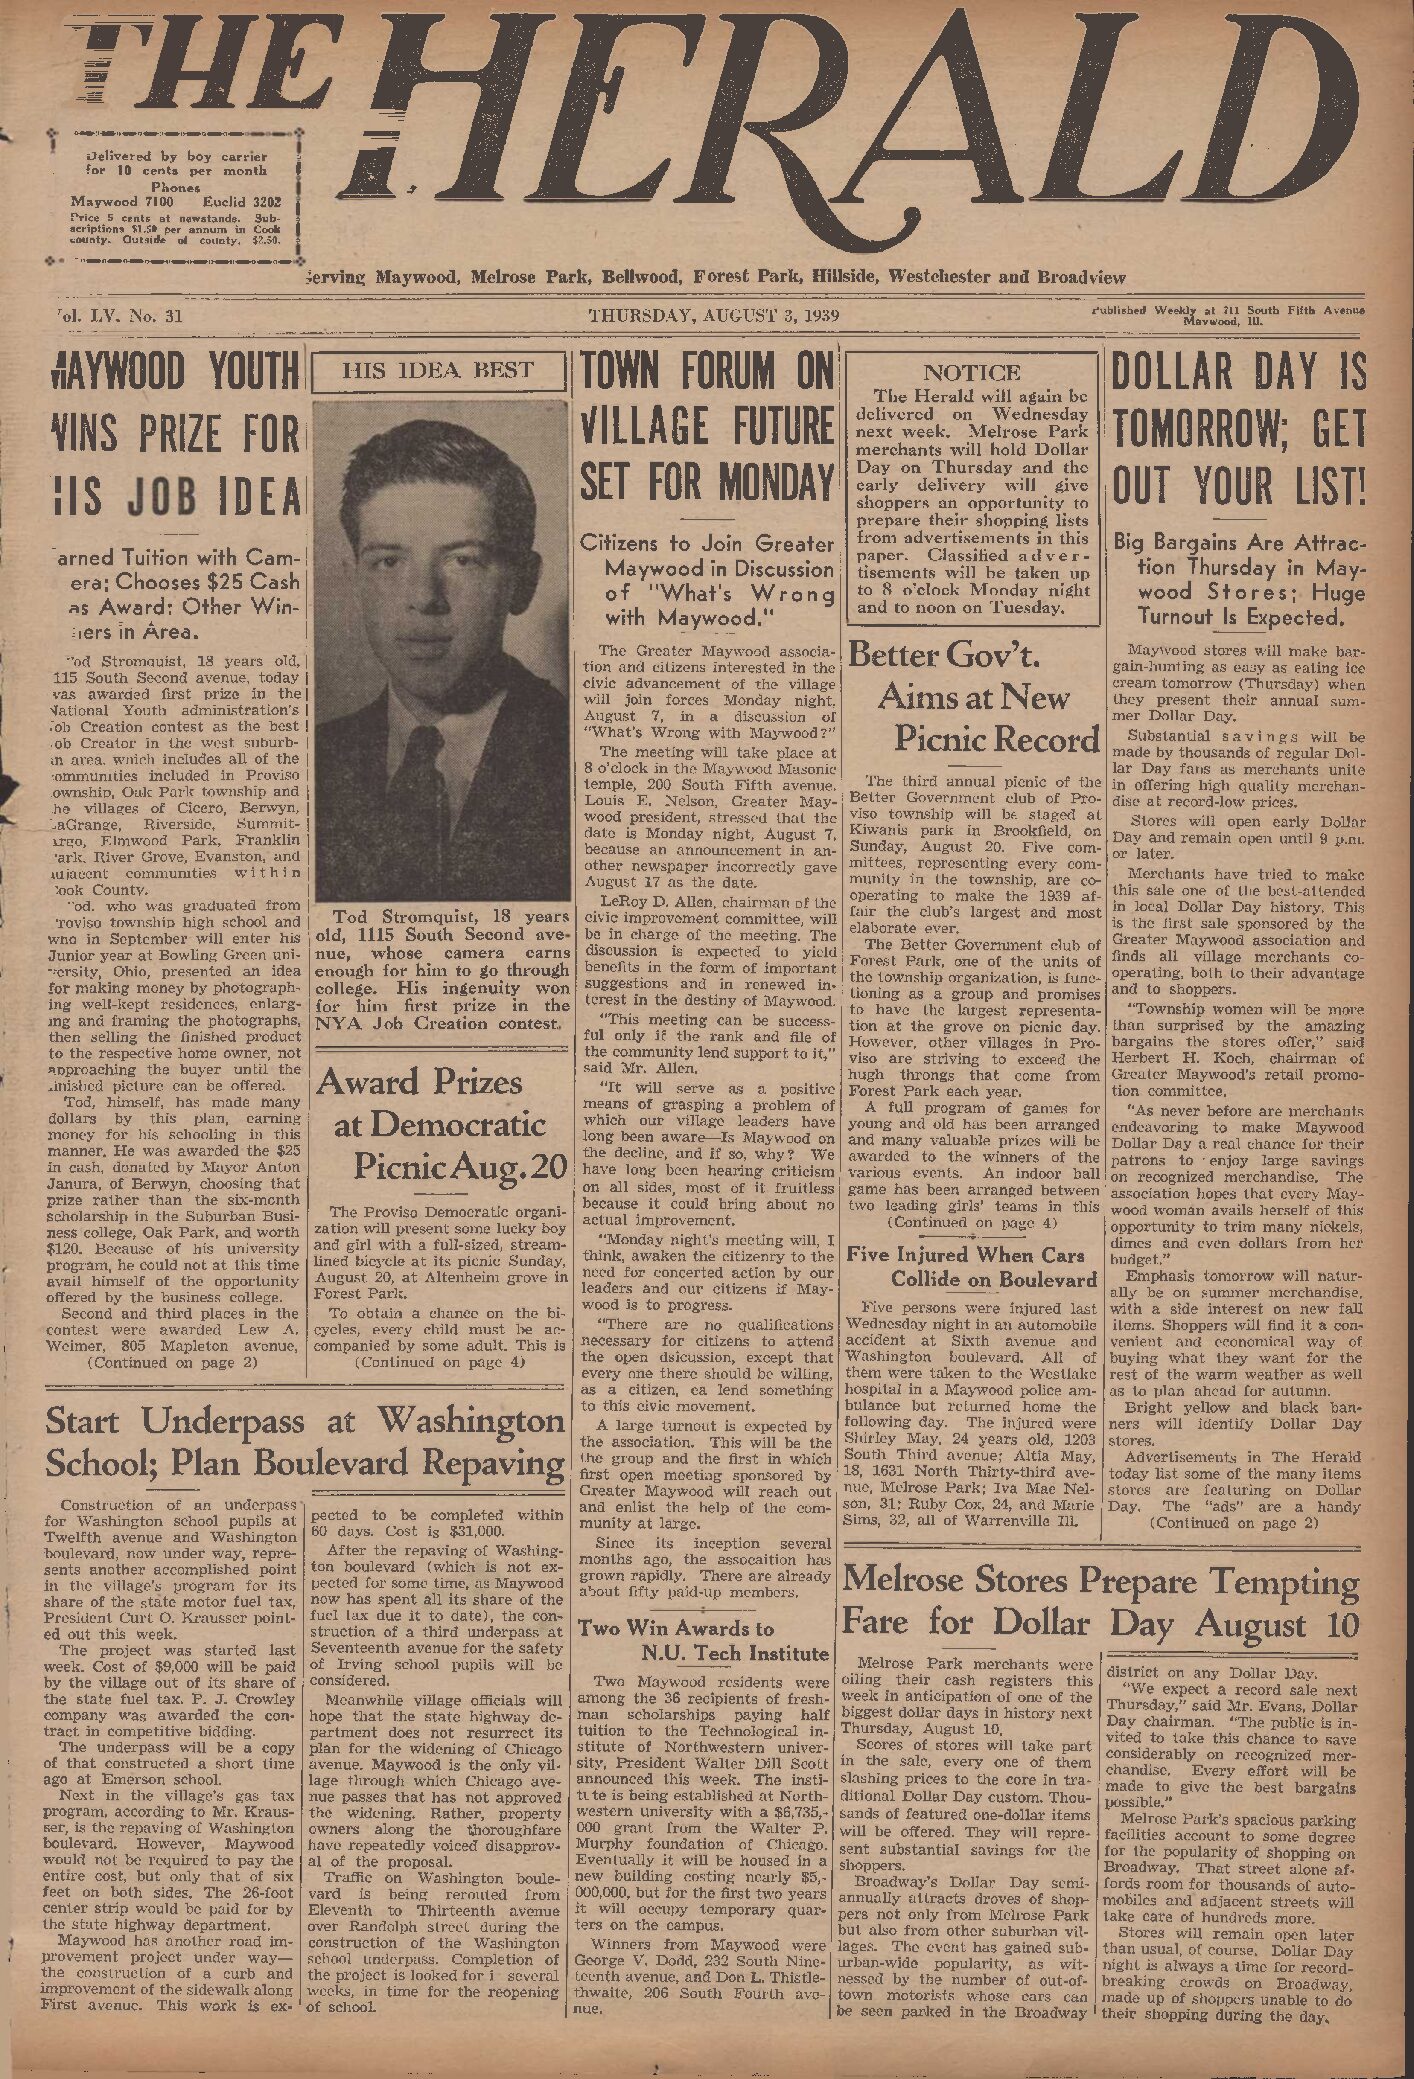 The Herald – 19390803